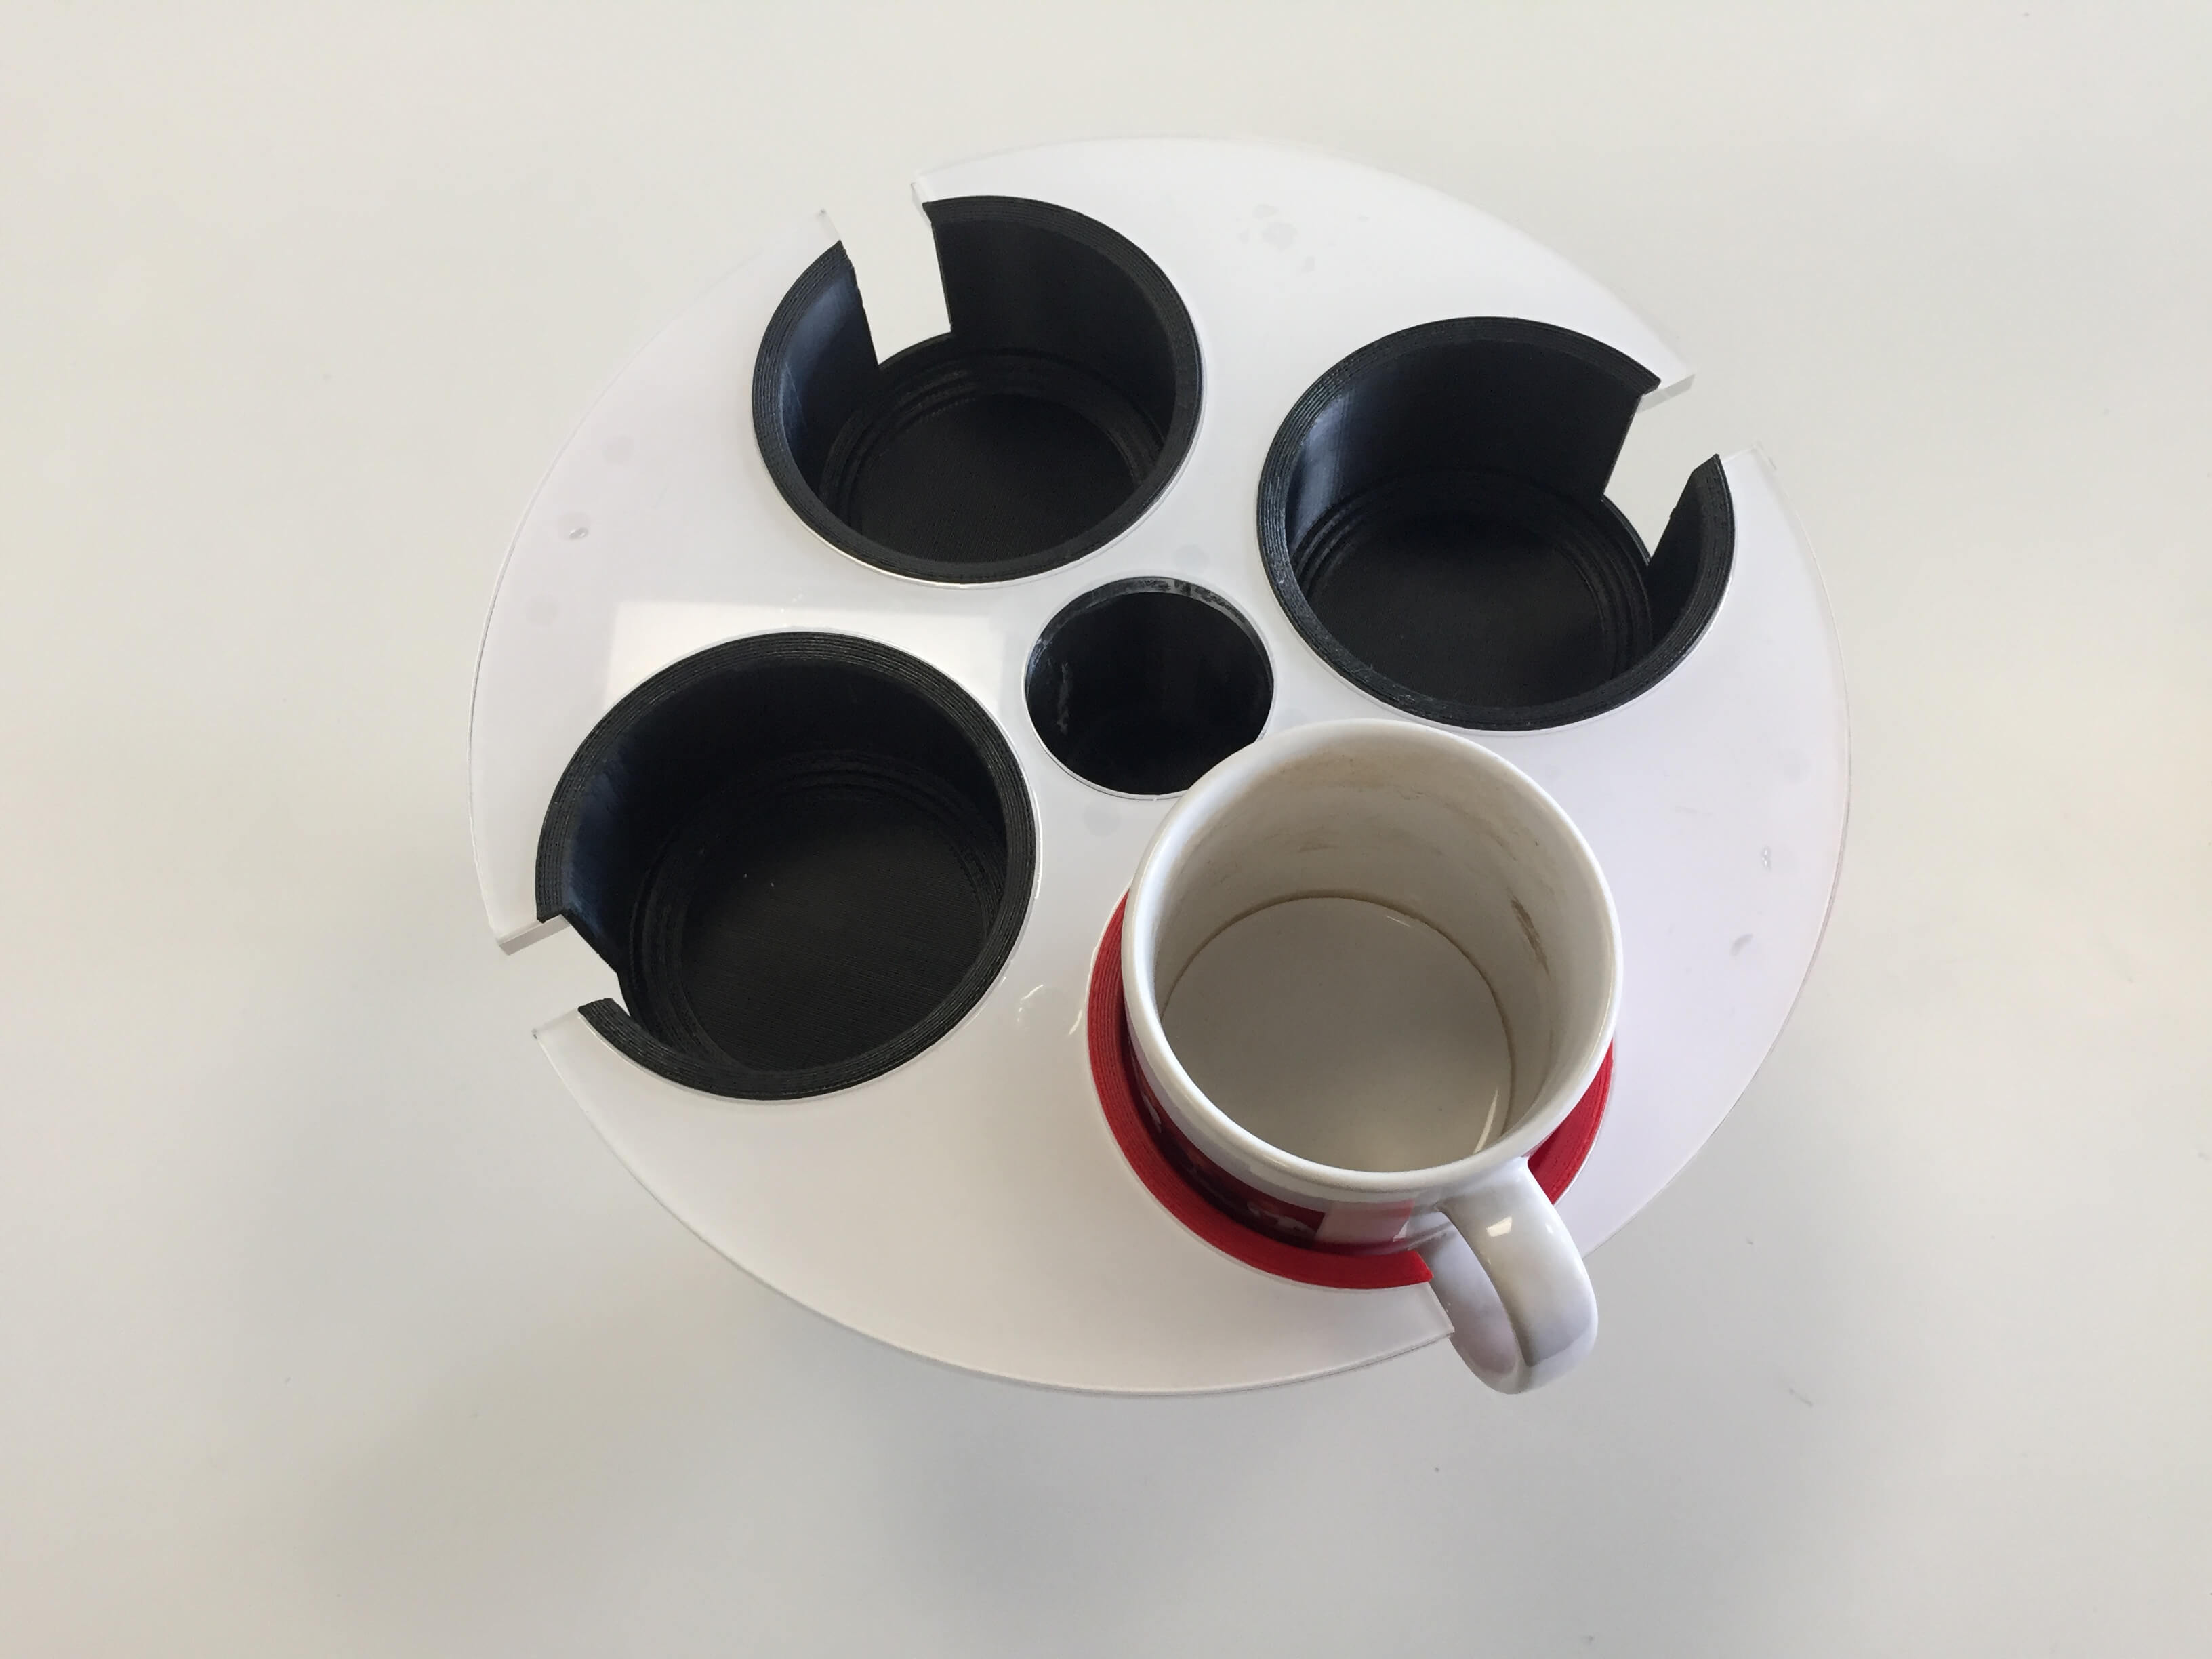 A mug on the tray